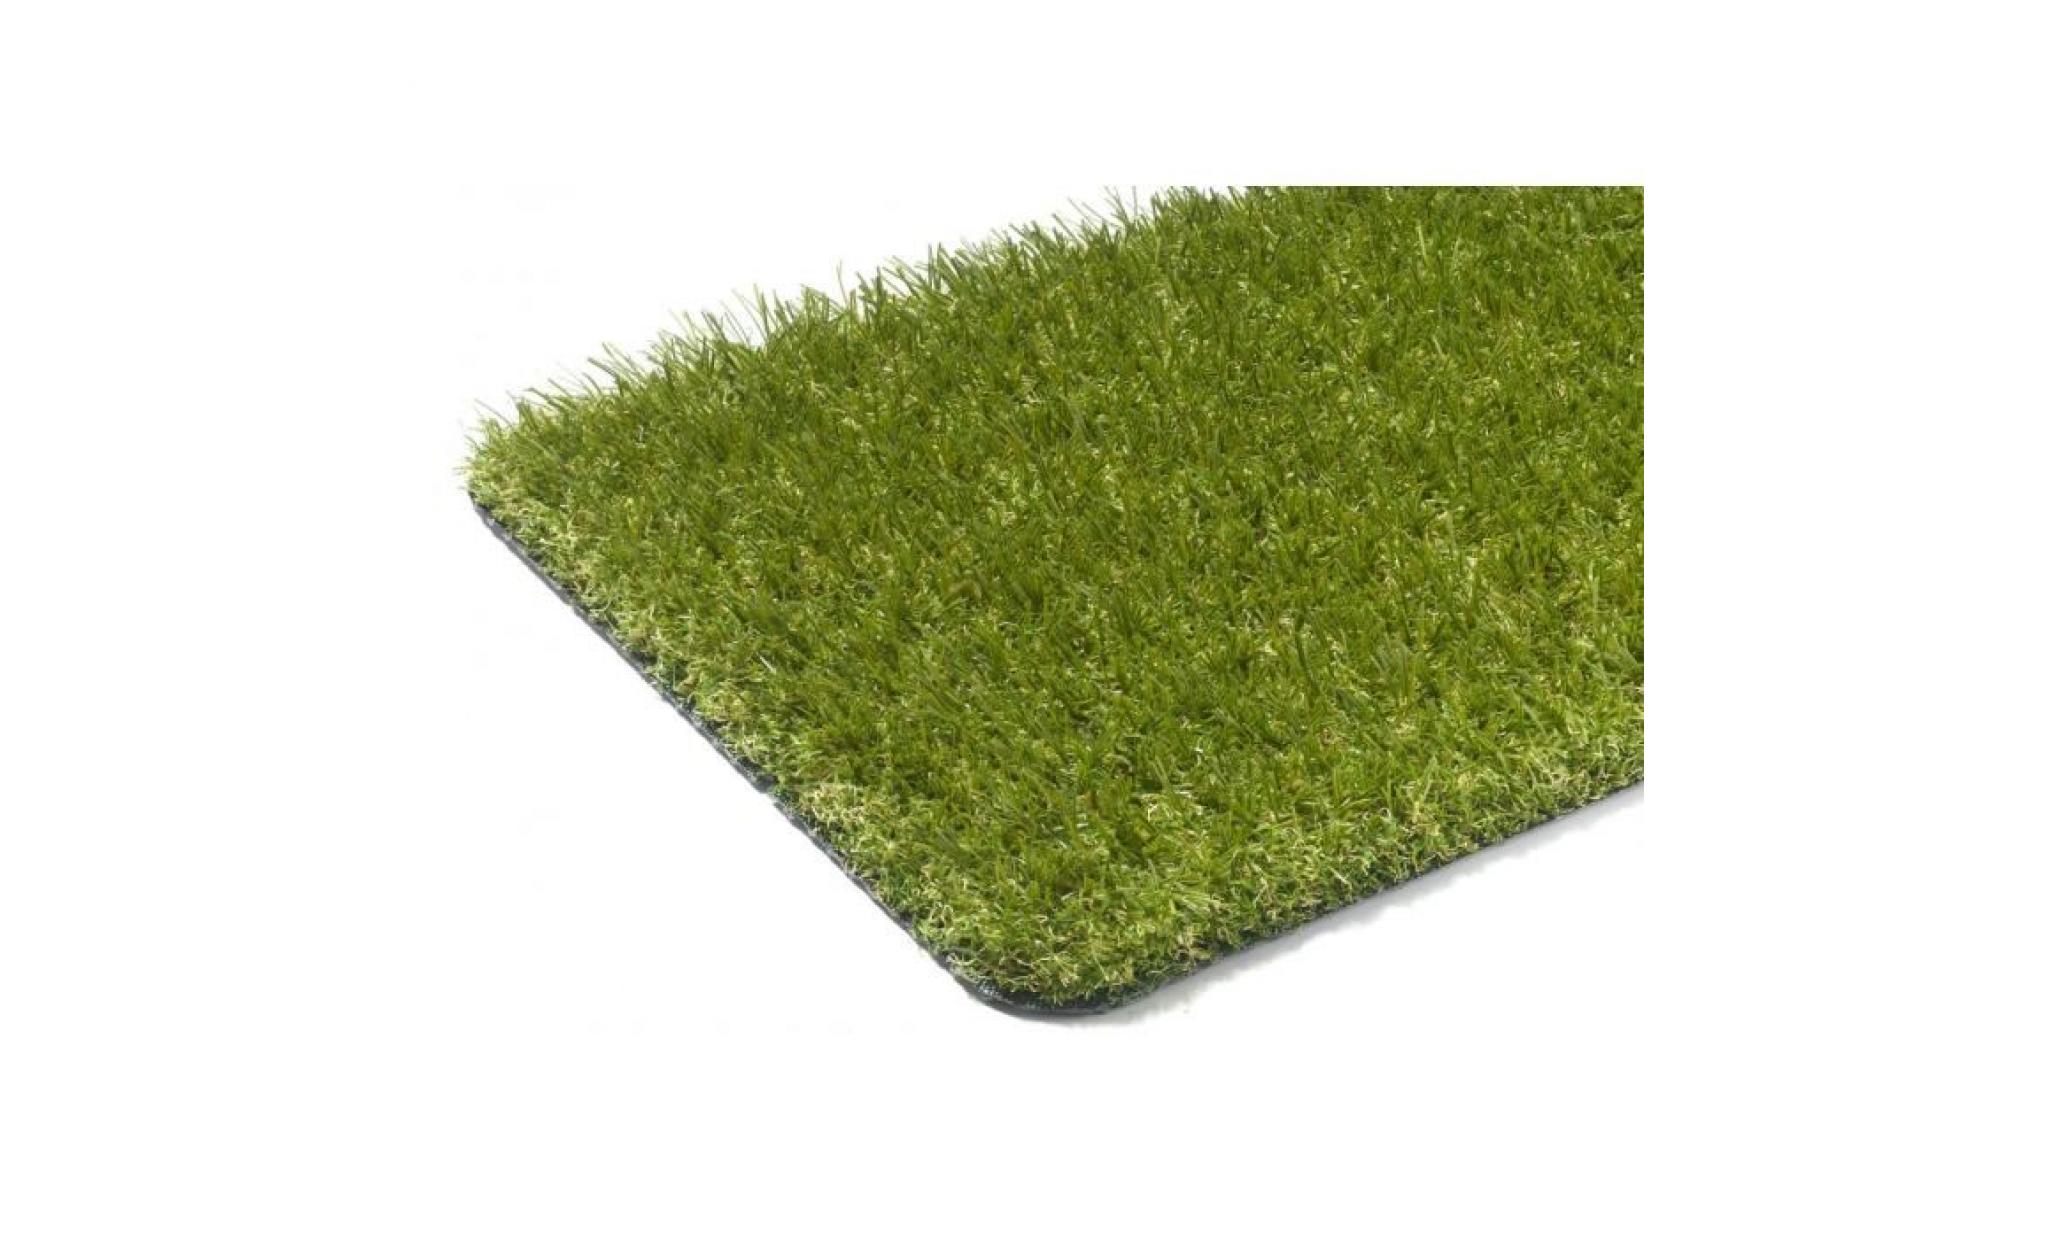 wembley   tapis type luxe gazon artificiel – pour jardin, terrasse, balcon   vert  [400x50 cm]